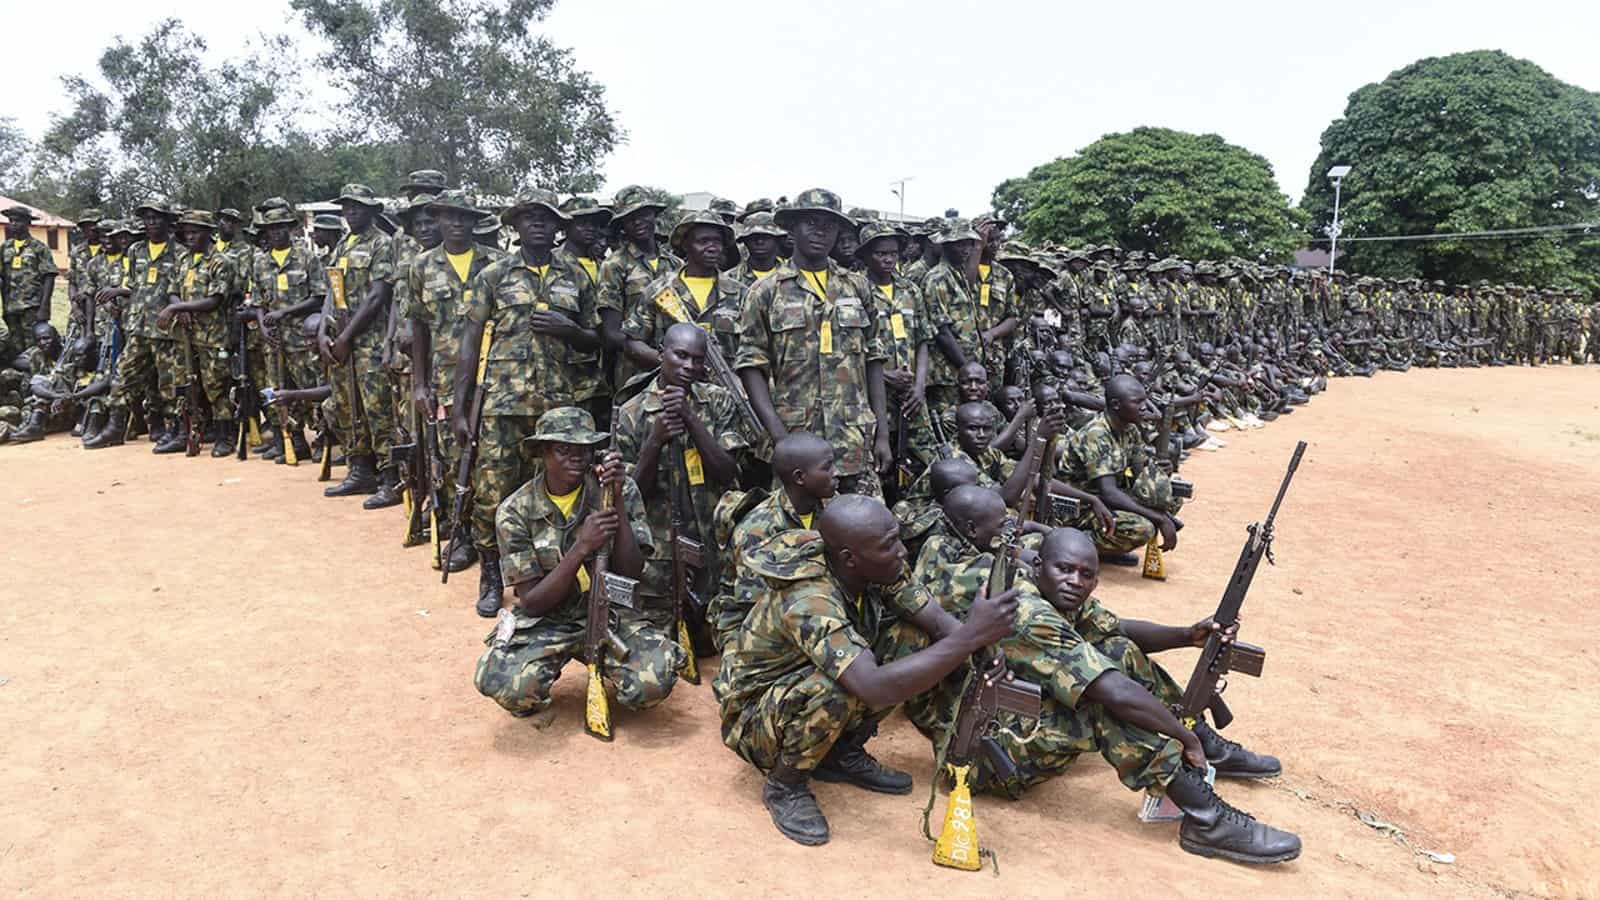 Nigerian Army Recruitment